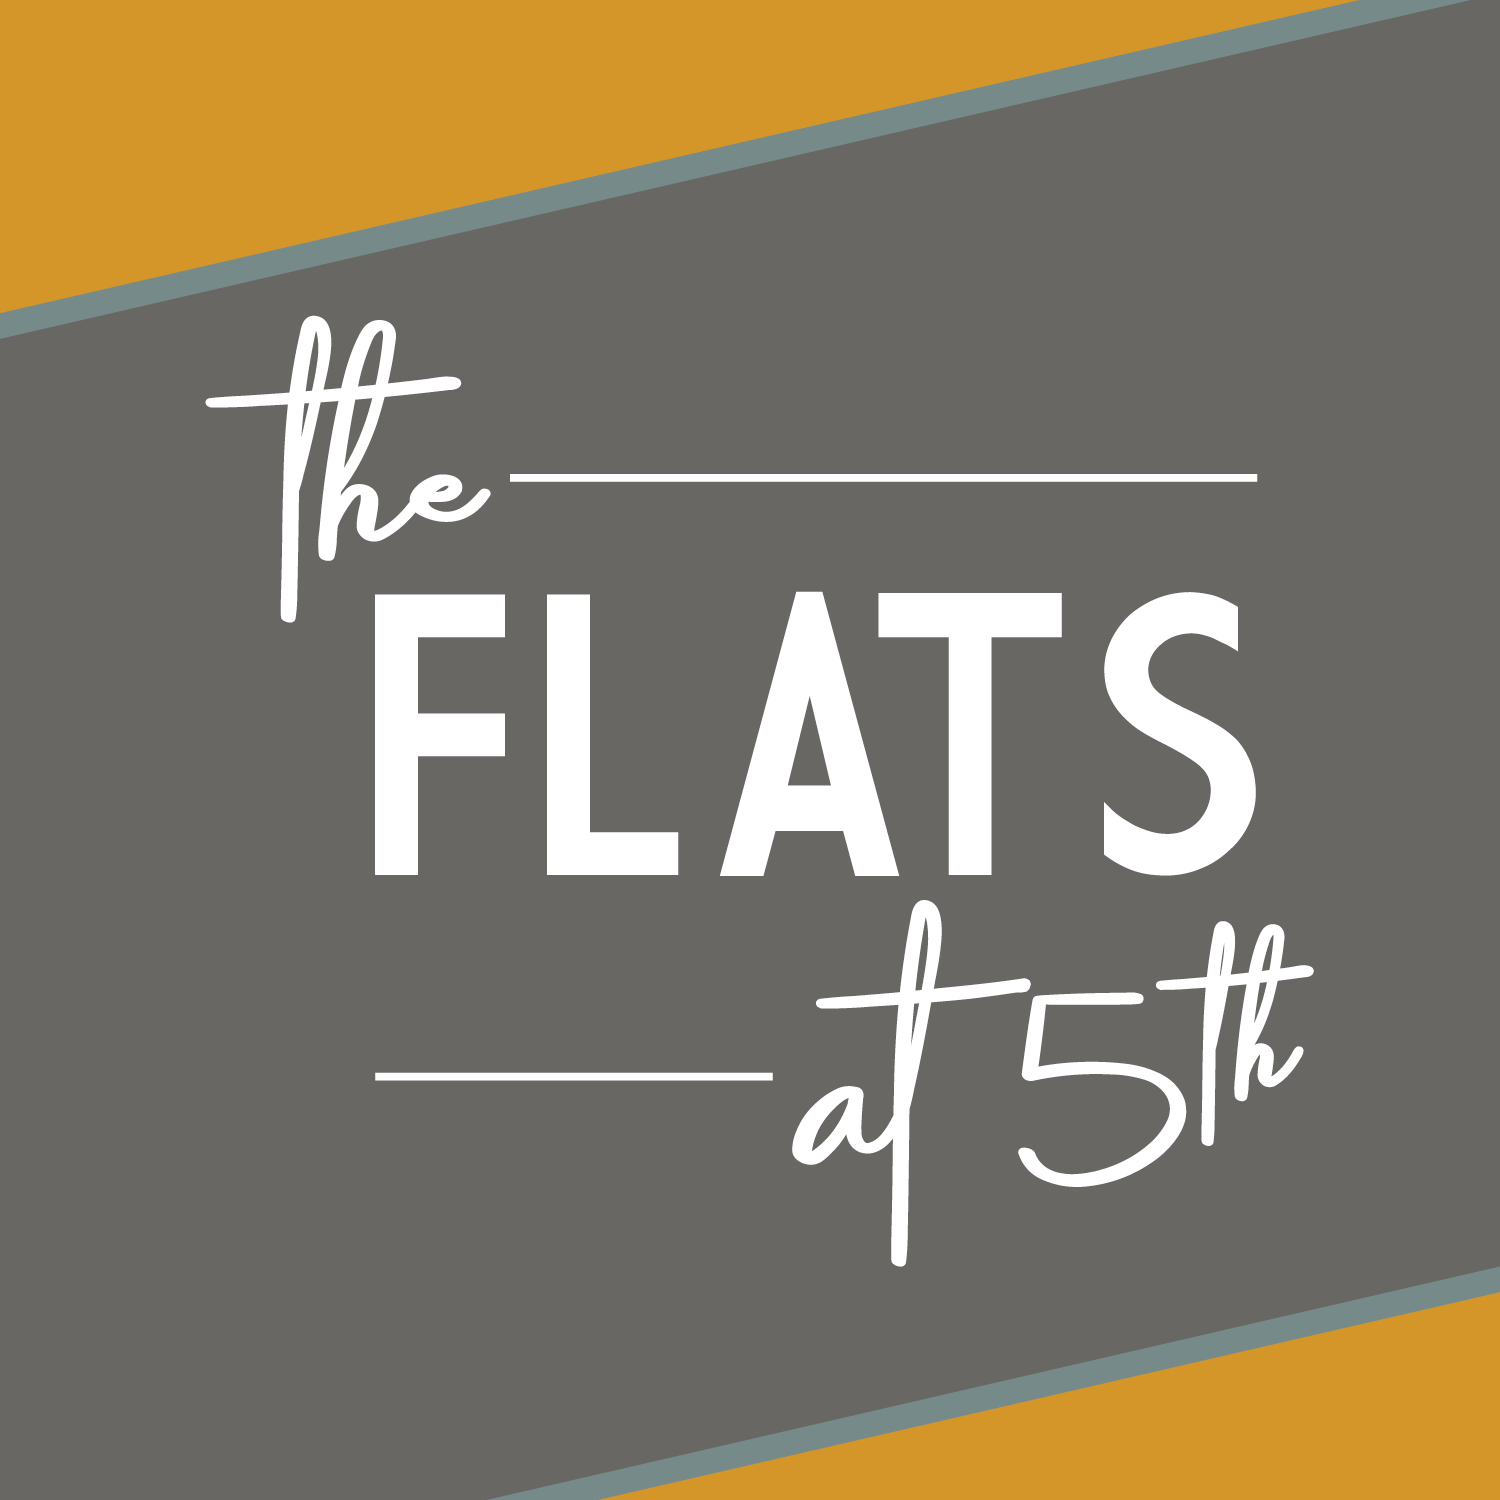 Flats at 5th - Columbus, NE 68601 - (402)606-4991 | ShowMeLocal.com